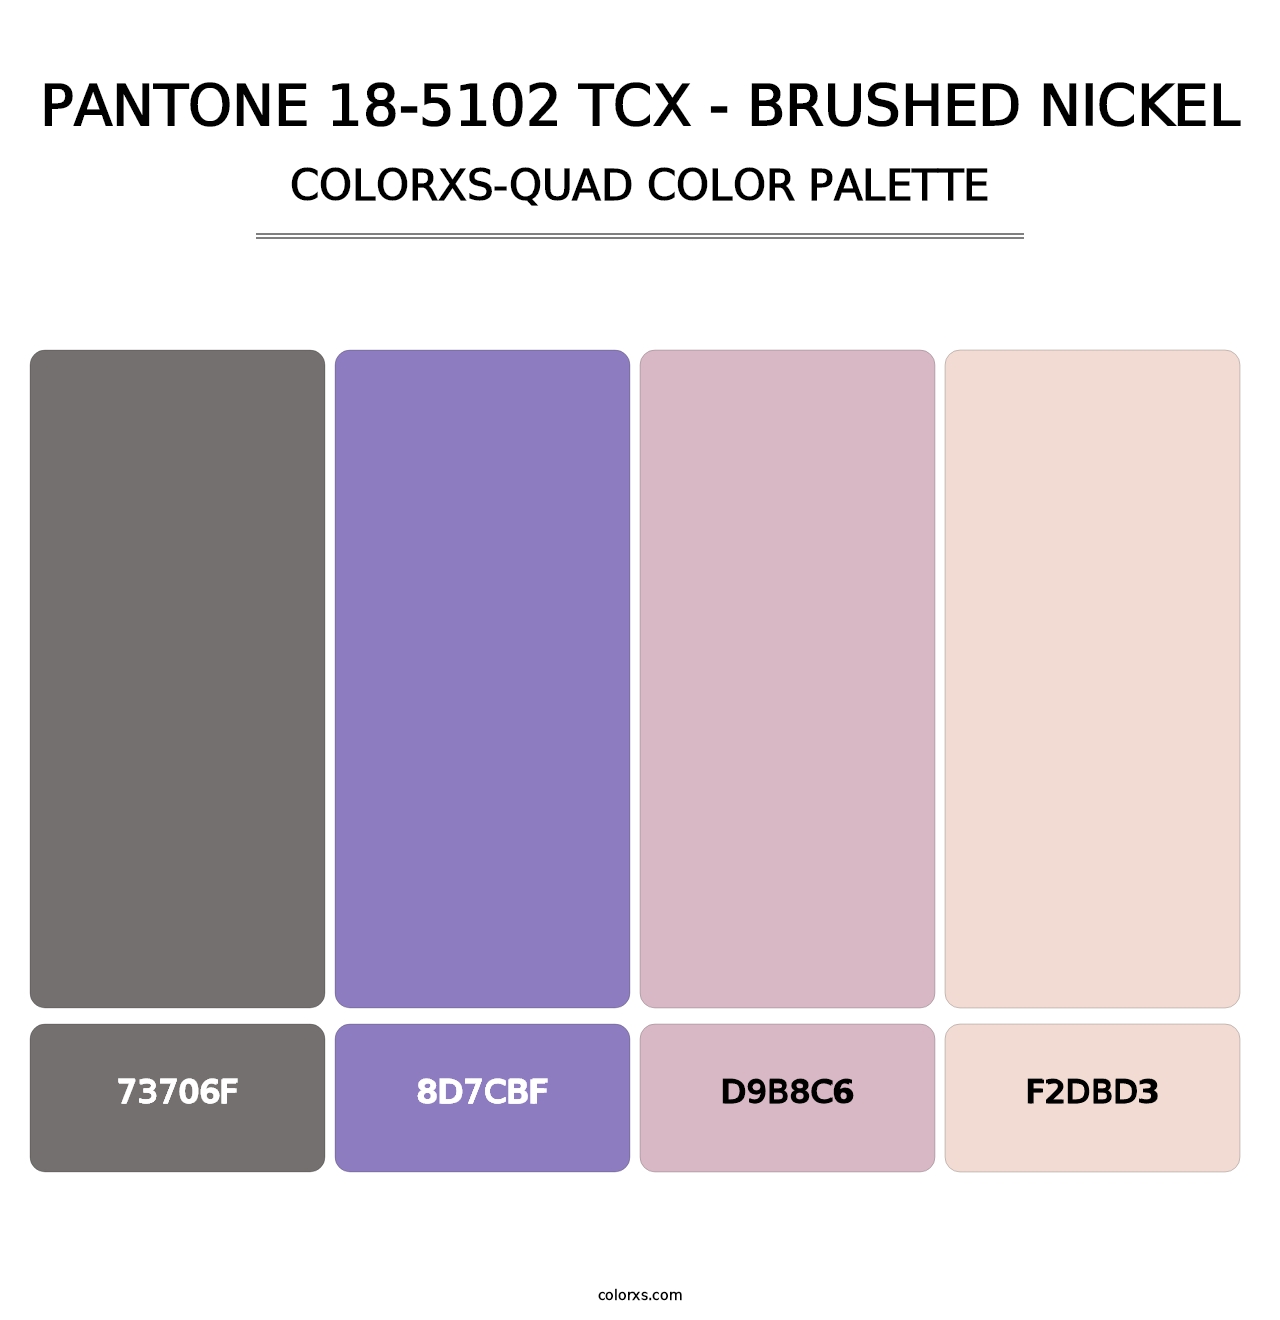 PANTONE 18-5102 TCX - Brushed Nickel - Colorxs Quad Palette